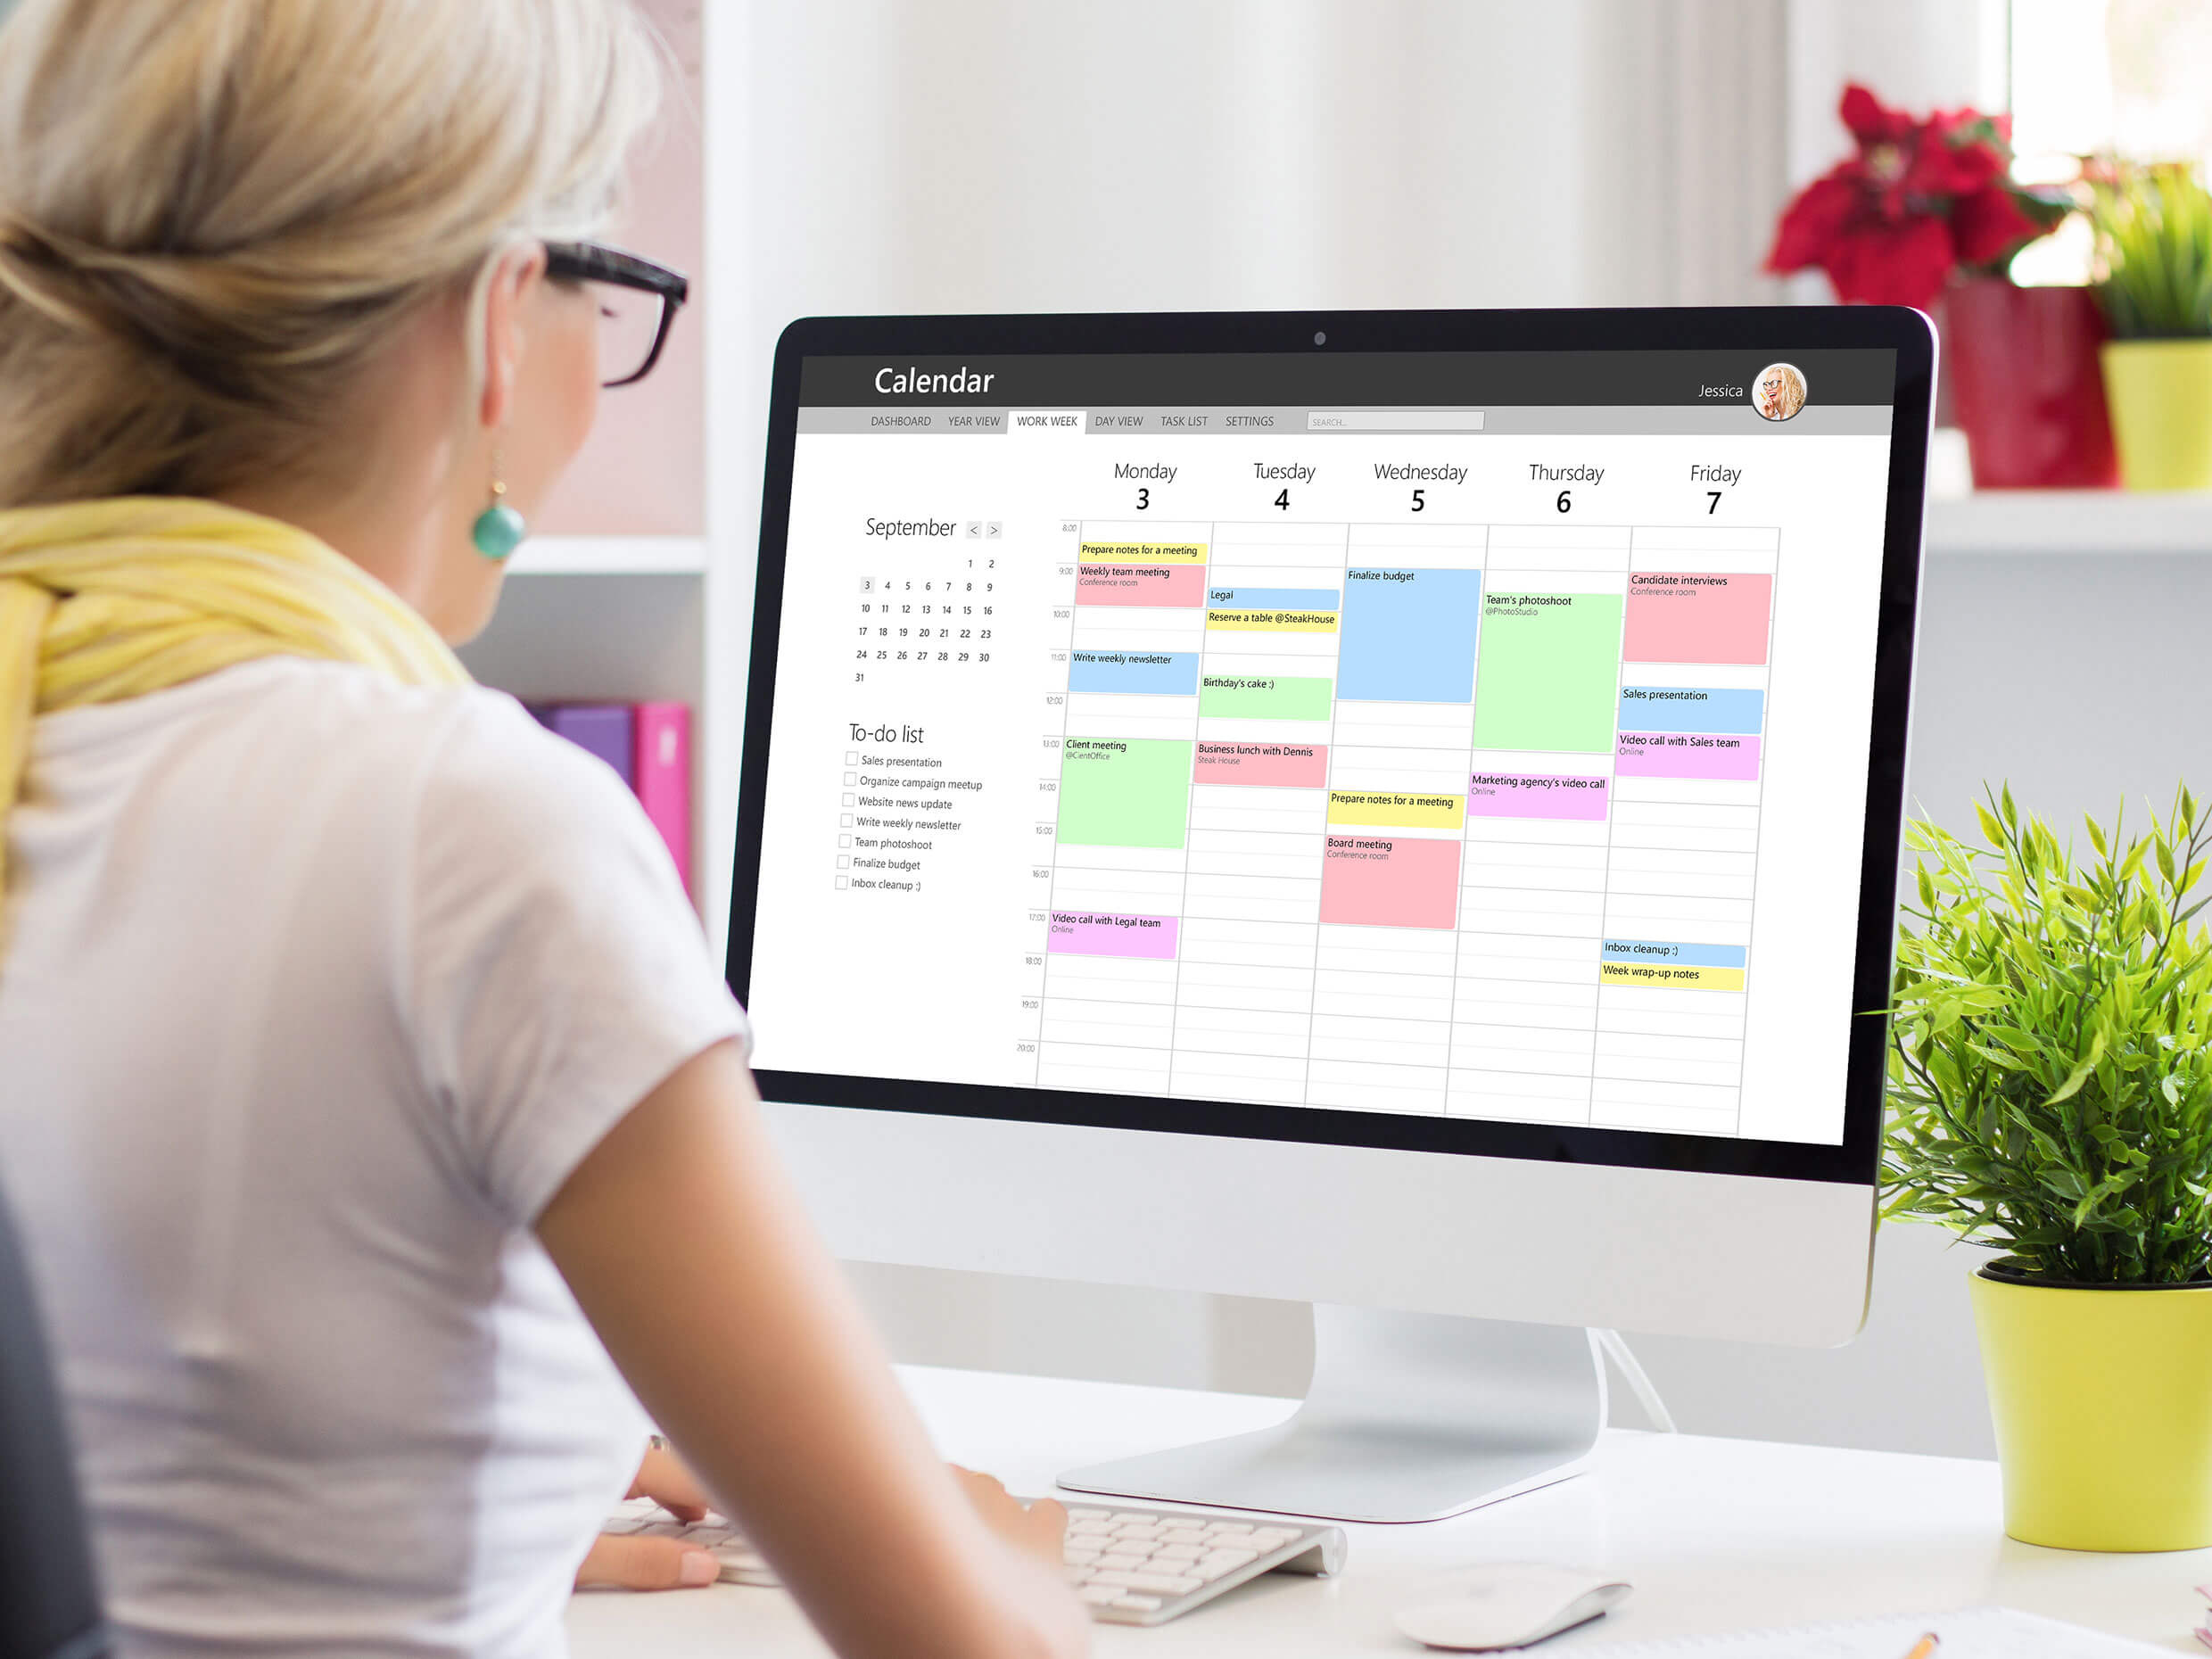 Student opening calendar app to organize tasks